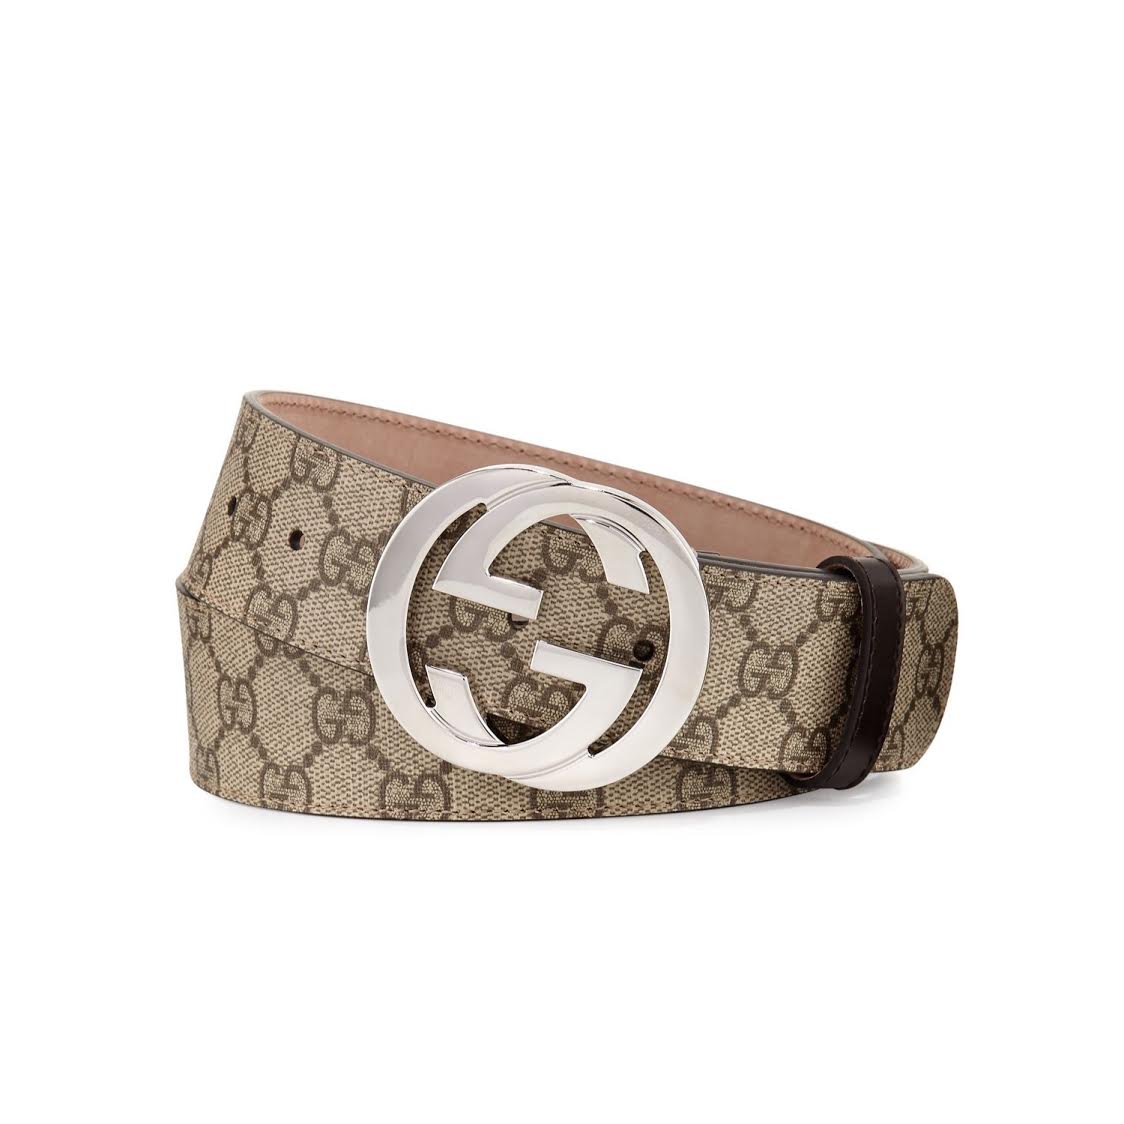 Gucci GG Supreme Belt w/ Interlocking G - Size 36